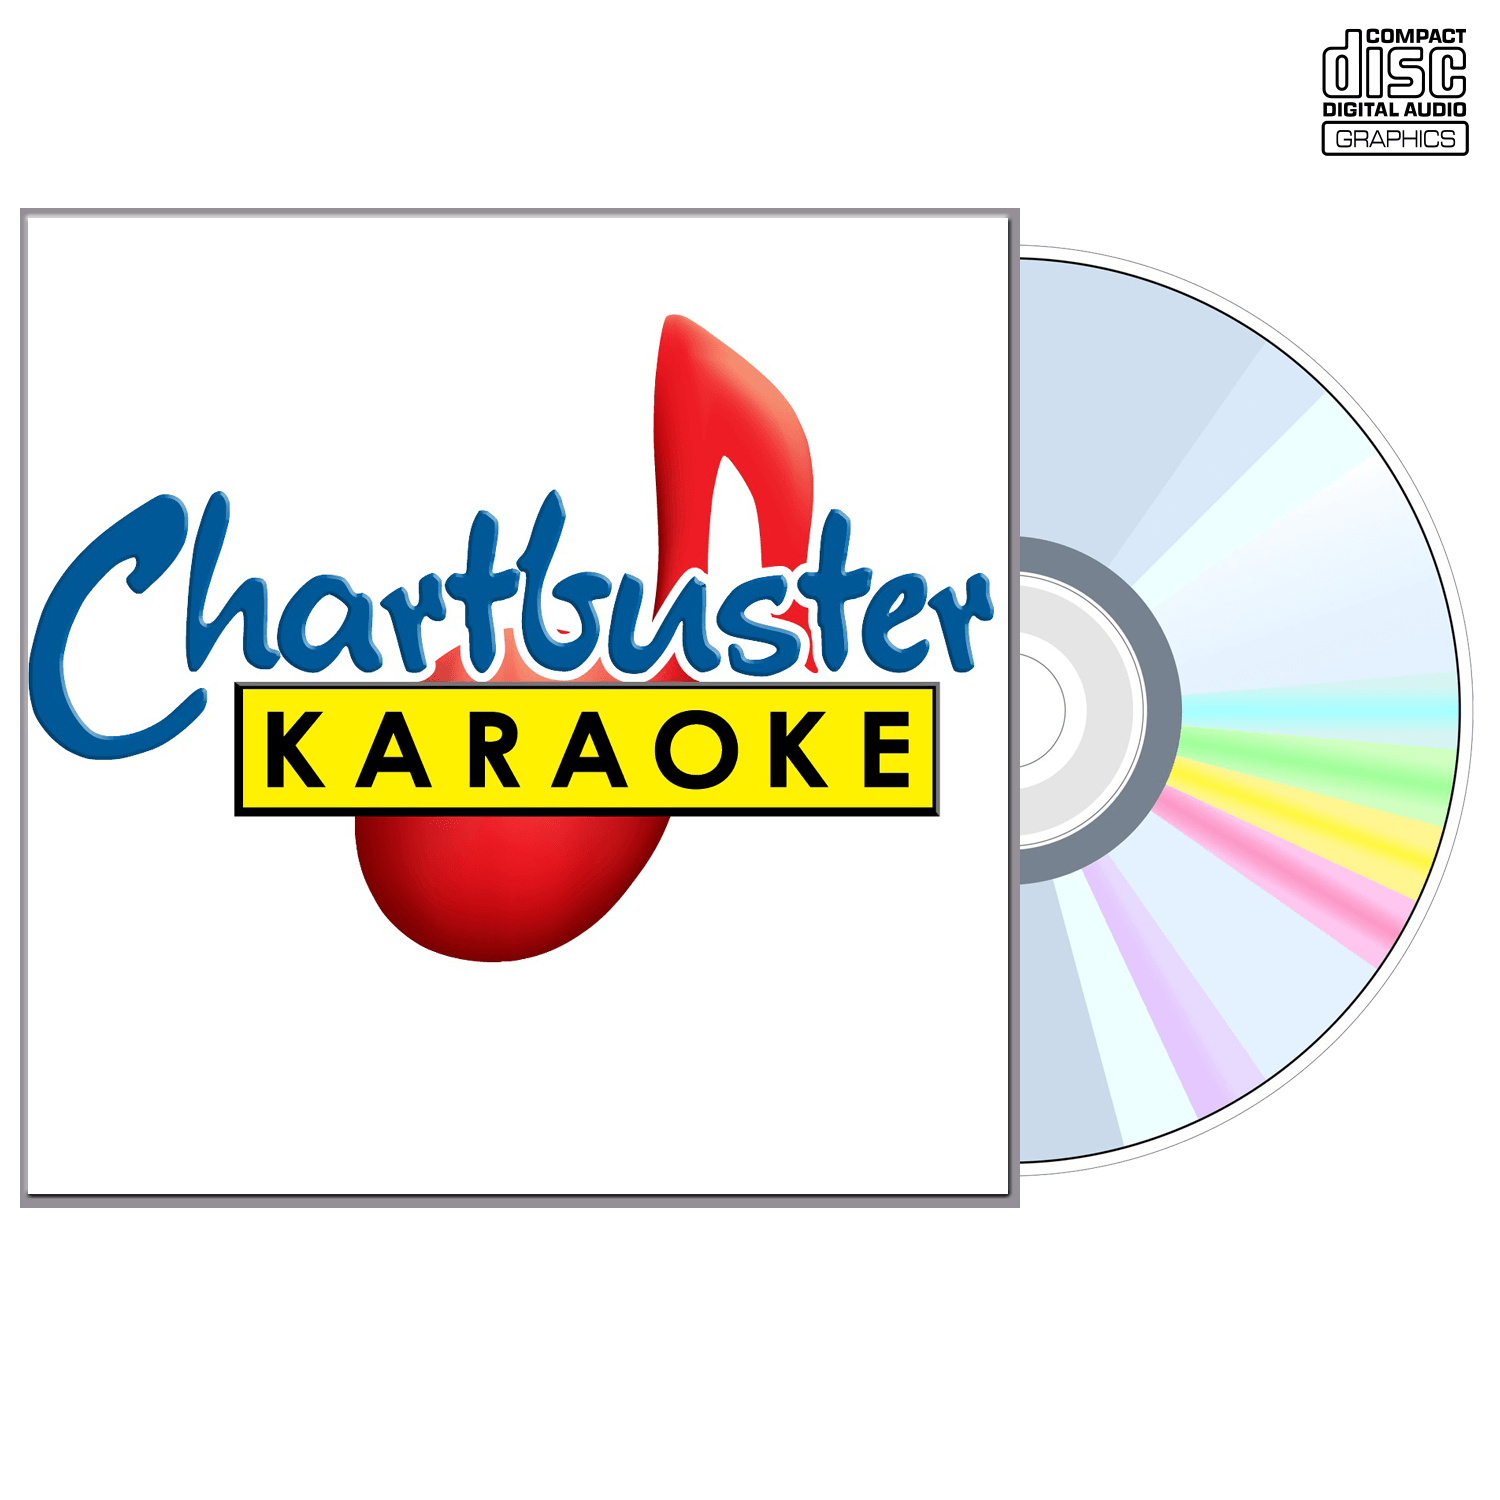 Modern Rock Vol 2 - CD+G - Chartbuster Karaoke - Karaoke Home Entertainment